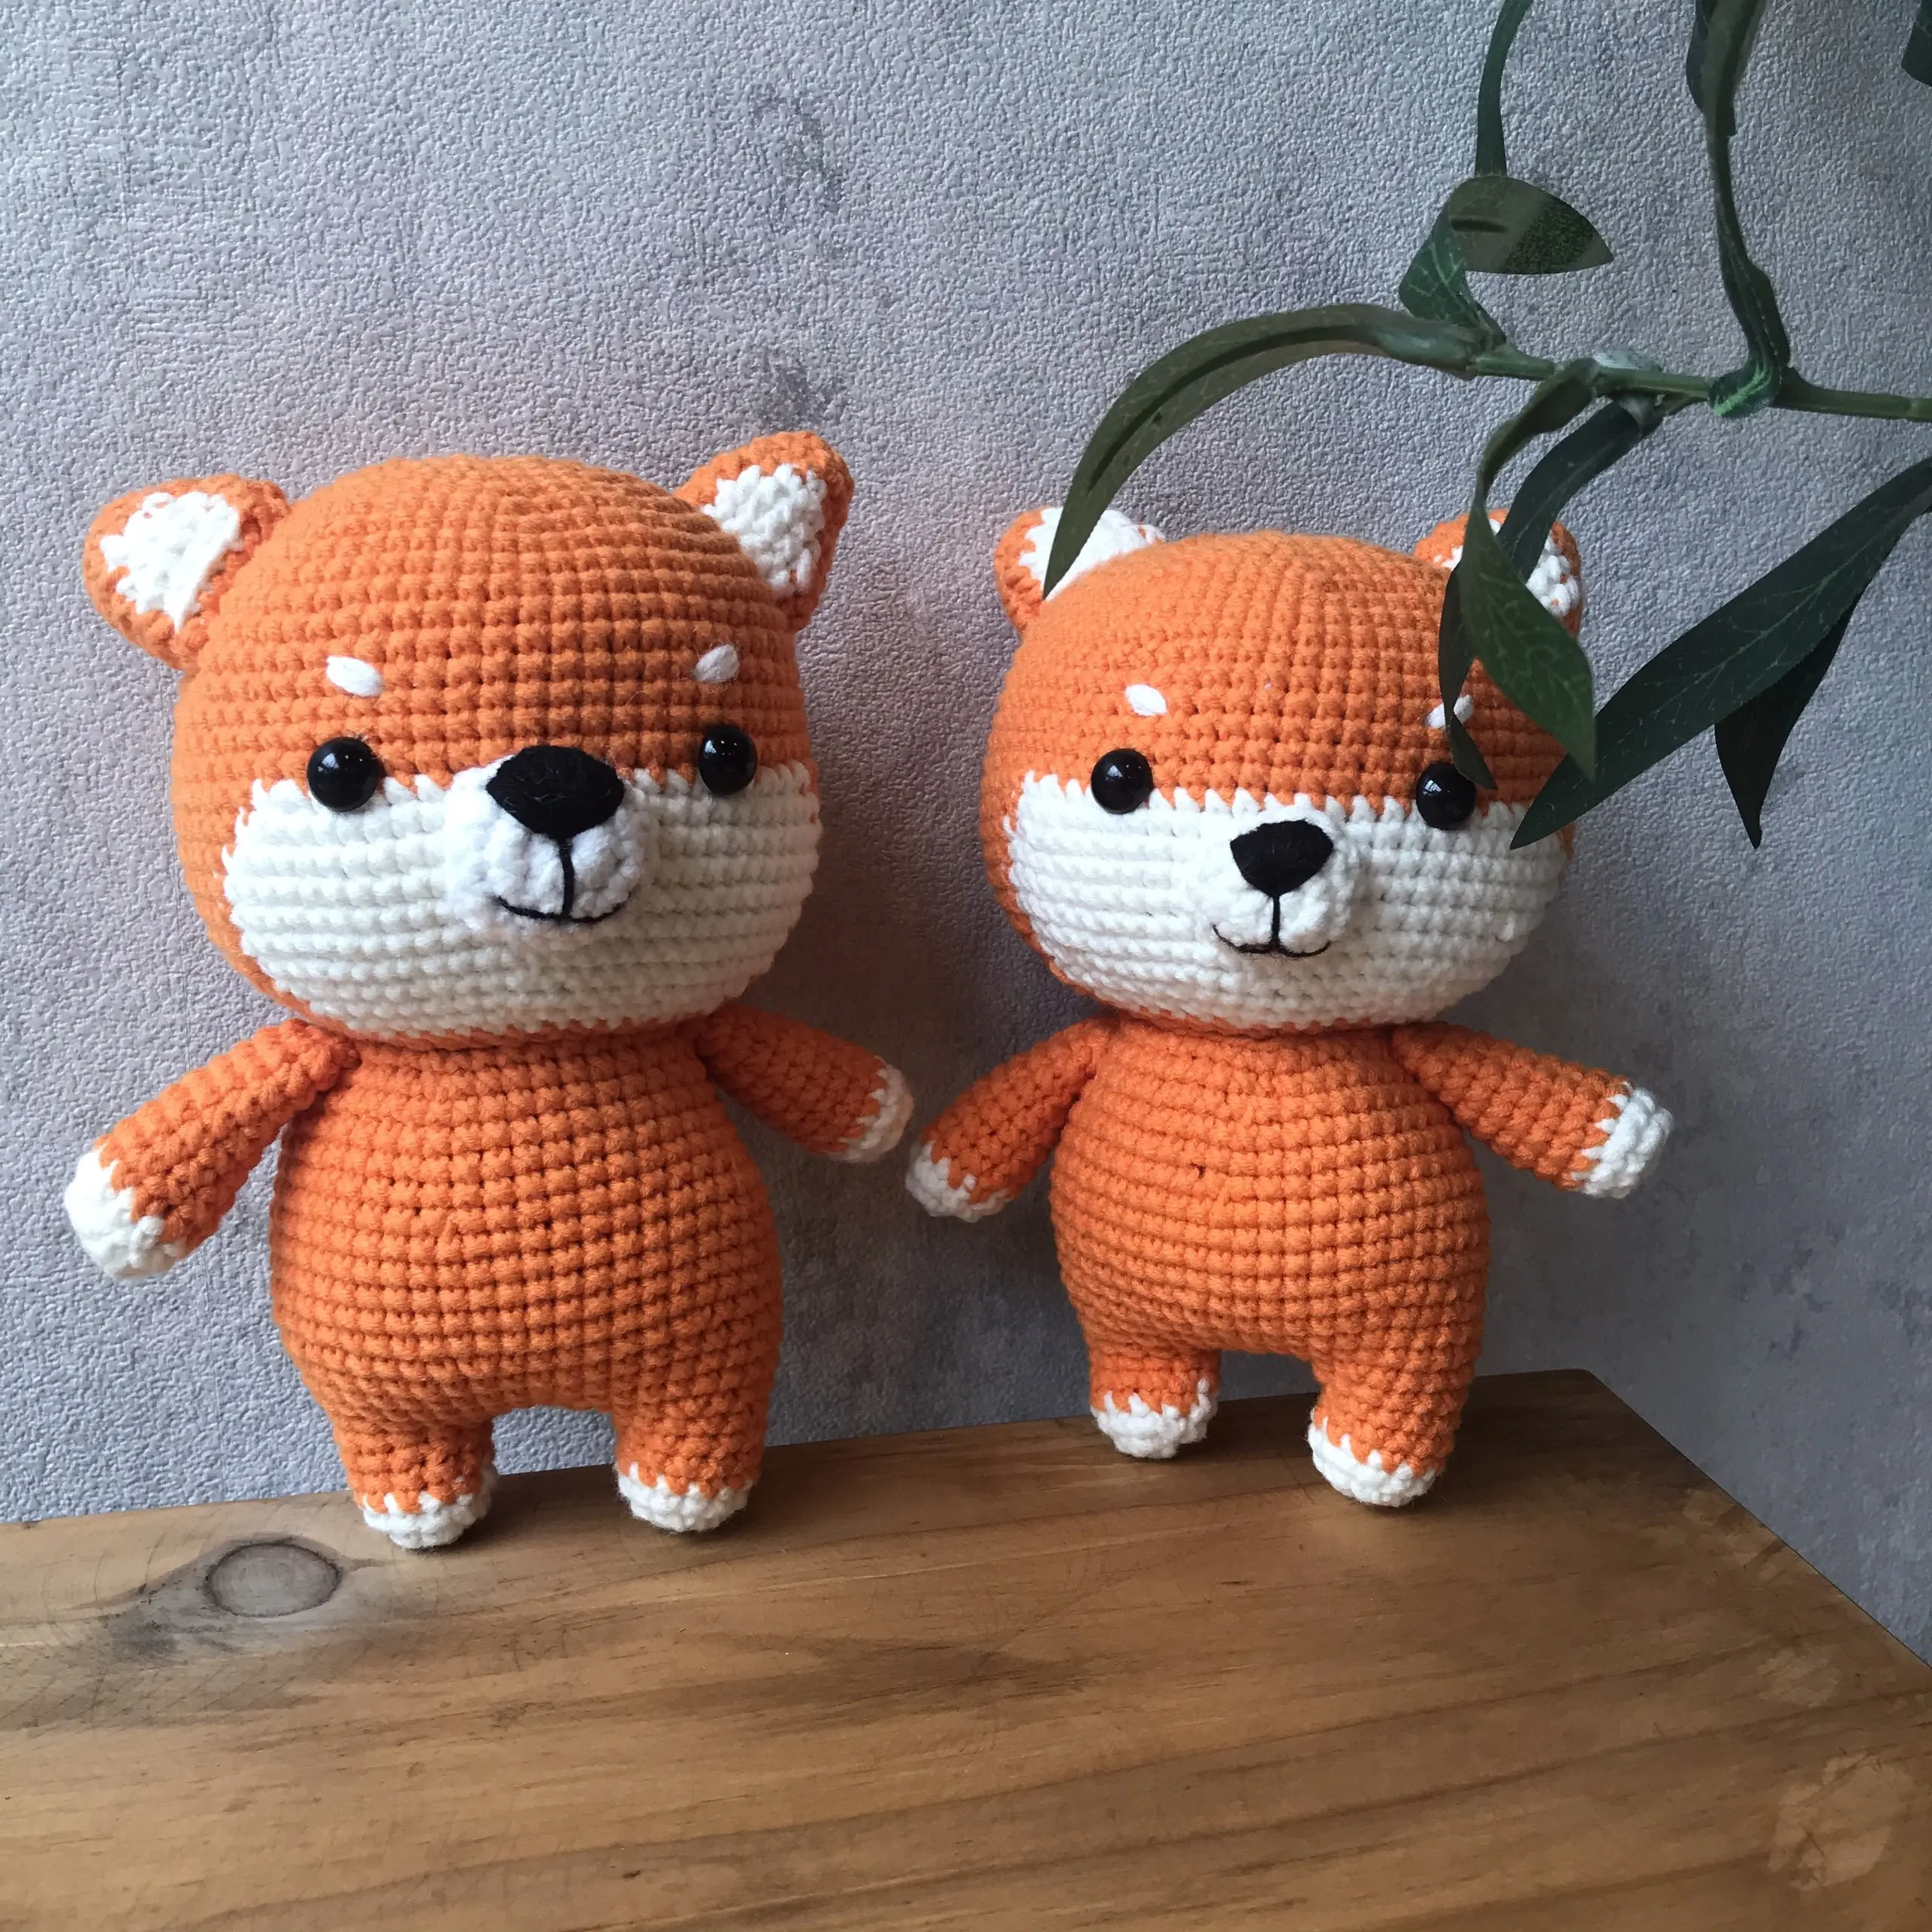 Knitting Handmade Crochet Princess Dolls Amigurumi Best Buy Gift Doll Stuffed Toys For Kids